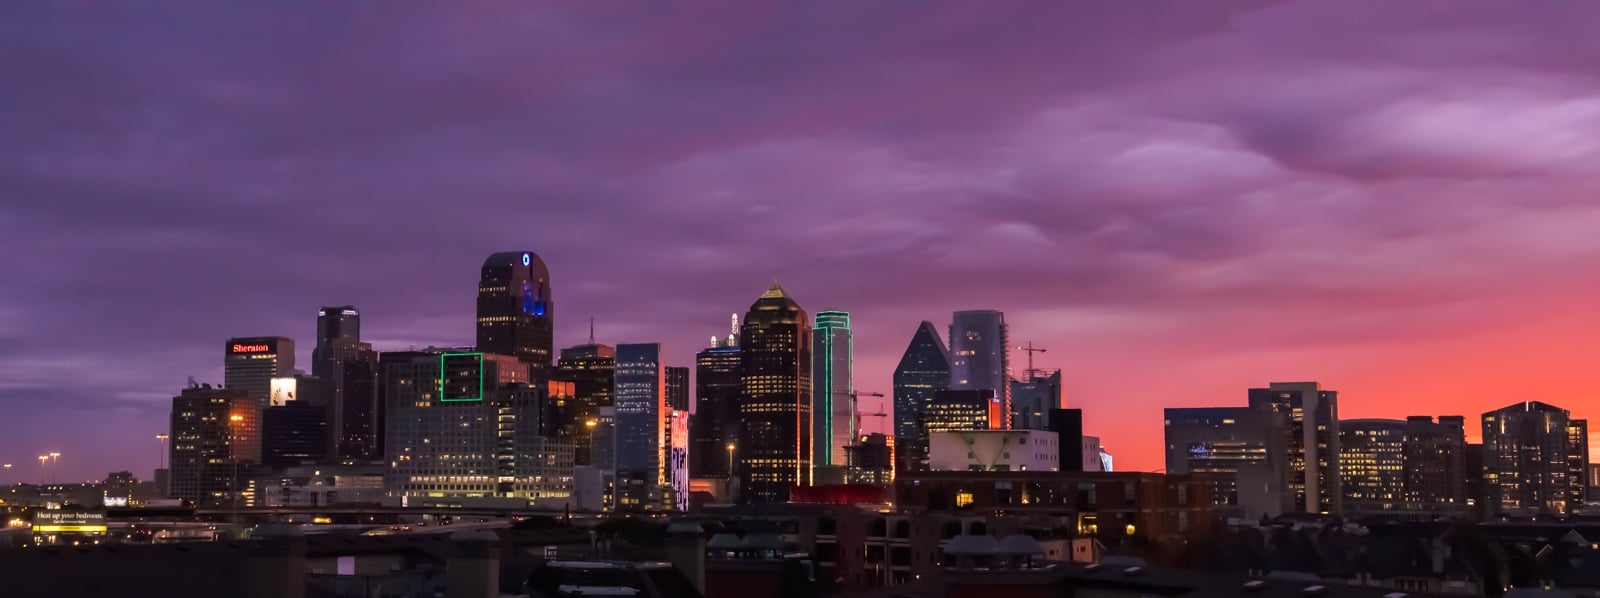 Dallas skyline panorama during dramatic sunset